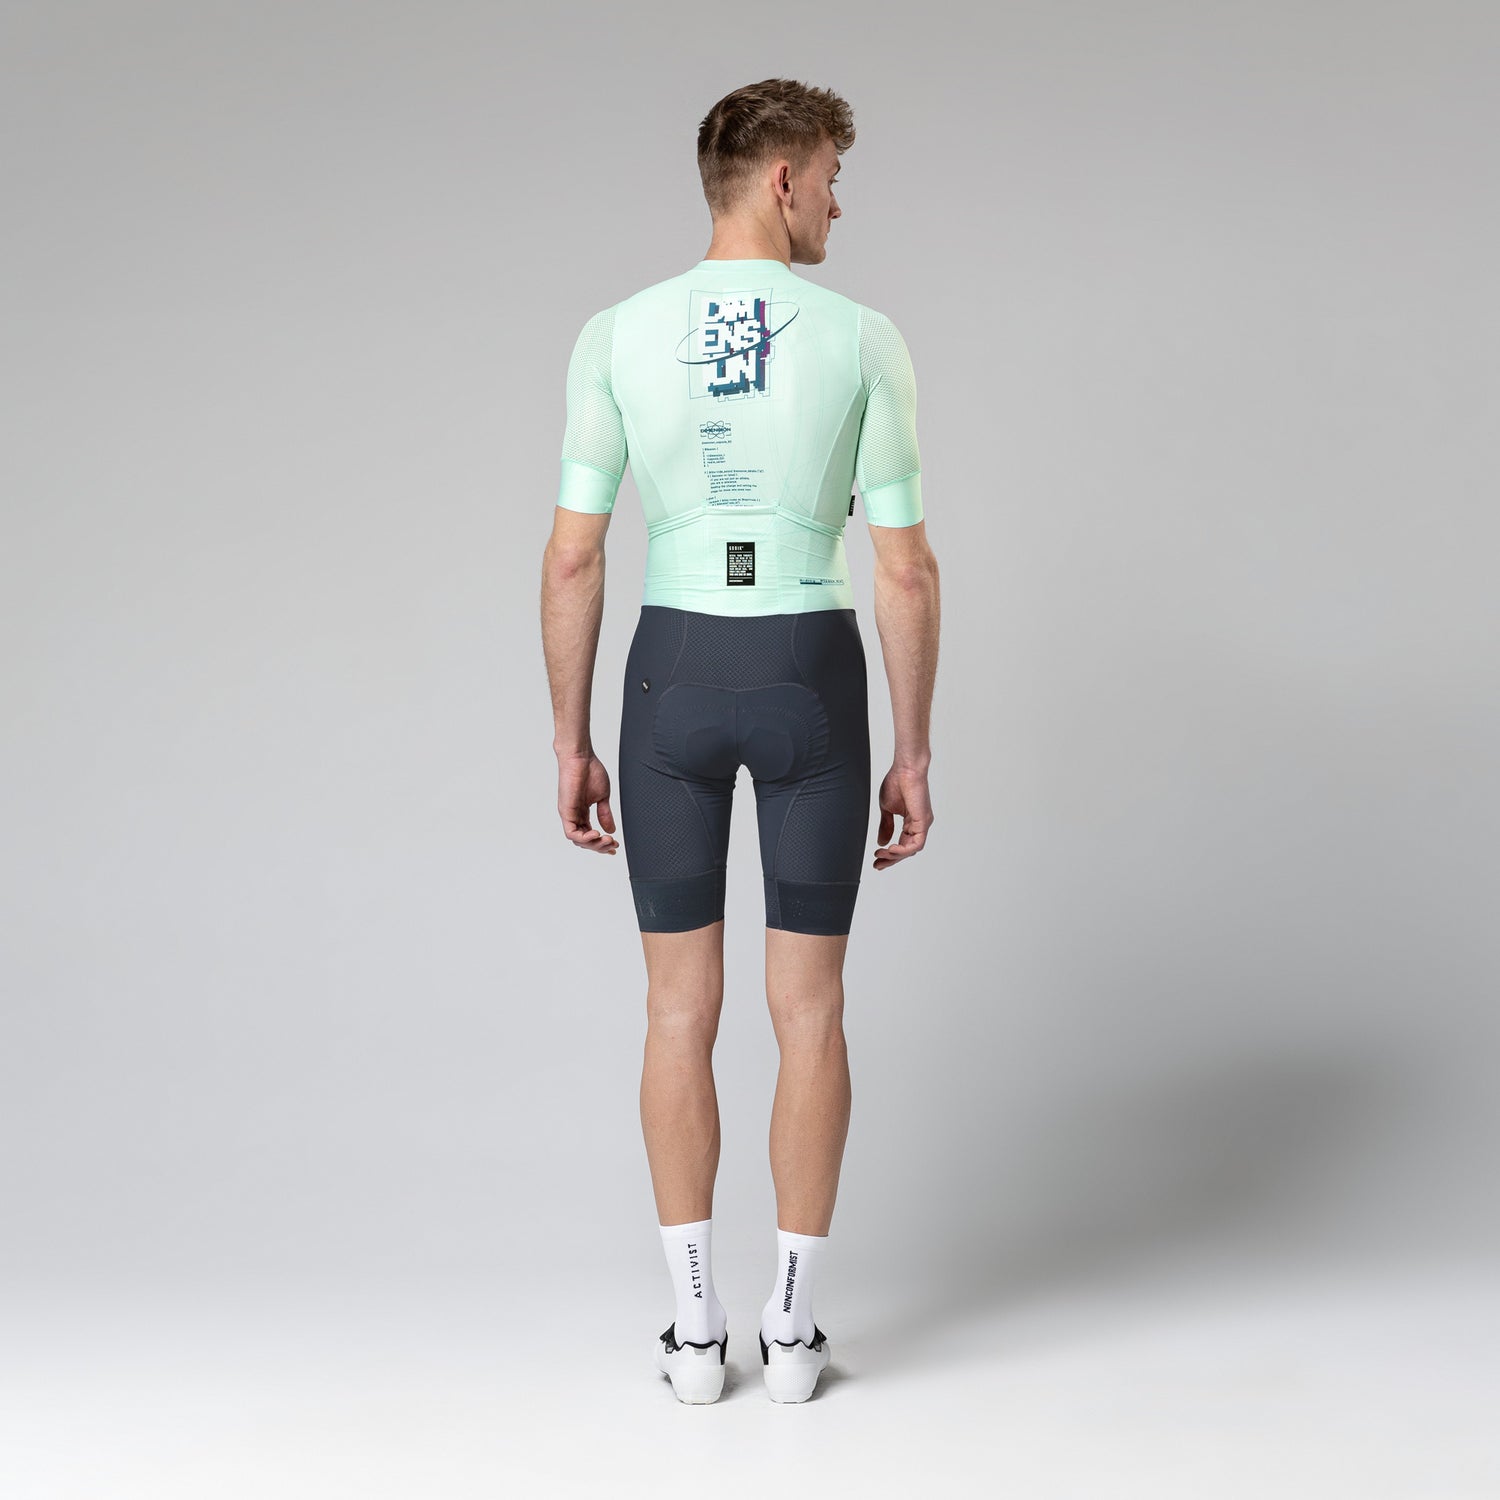 BROOKLYN - POLYTHEDRON - Cycling suit - Men – Gobik